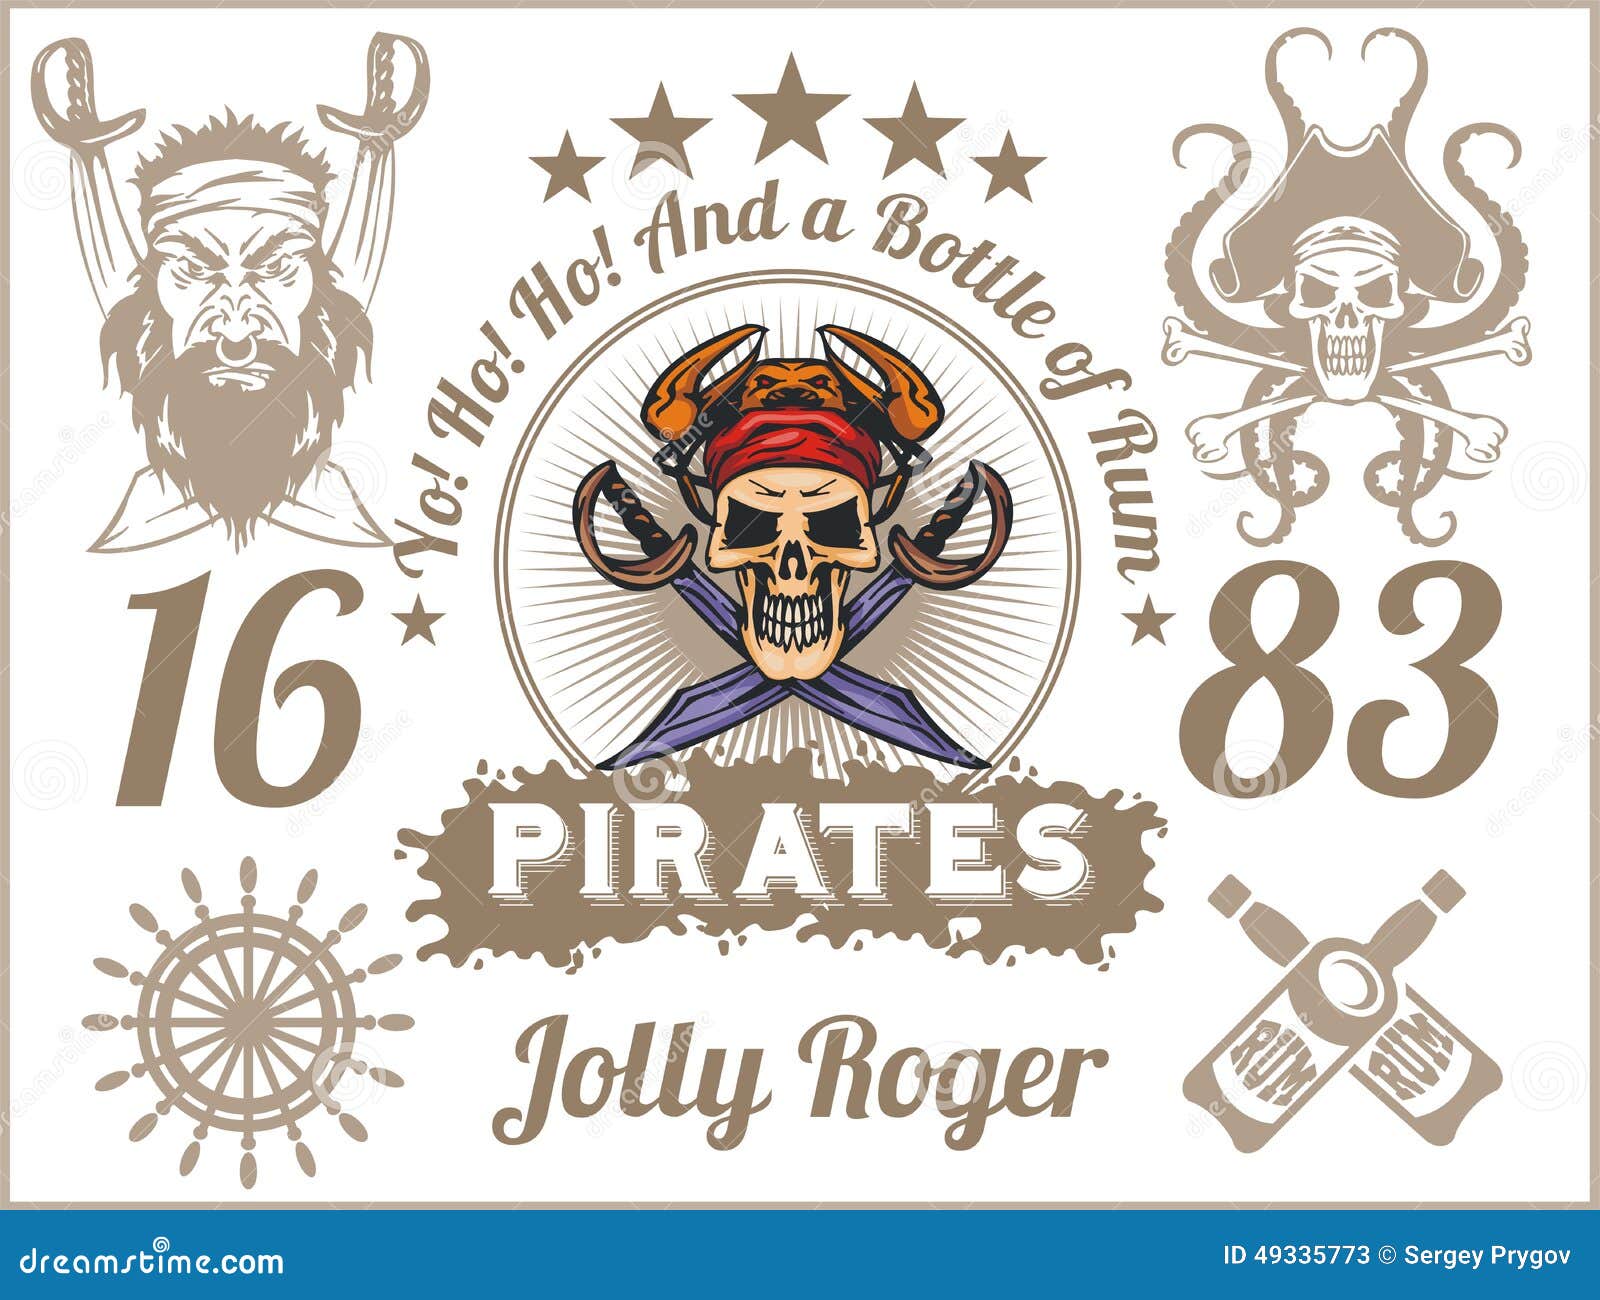 Pirates Basketball Team Design Jolly Roger Stock Vector (Royalty